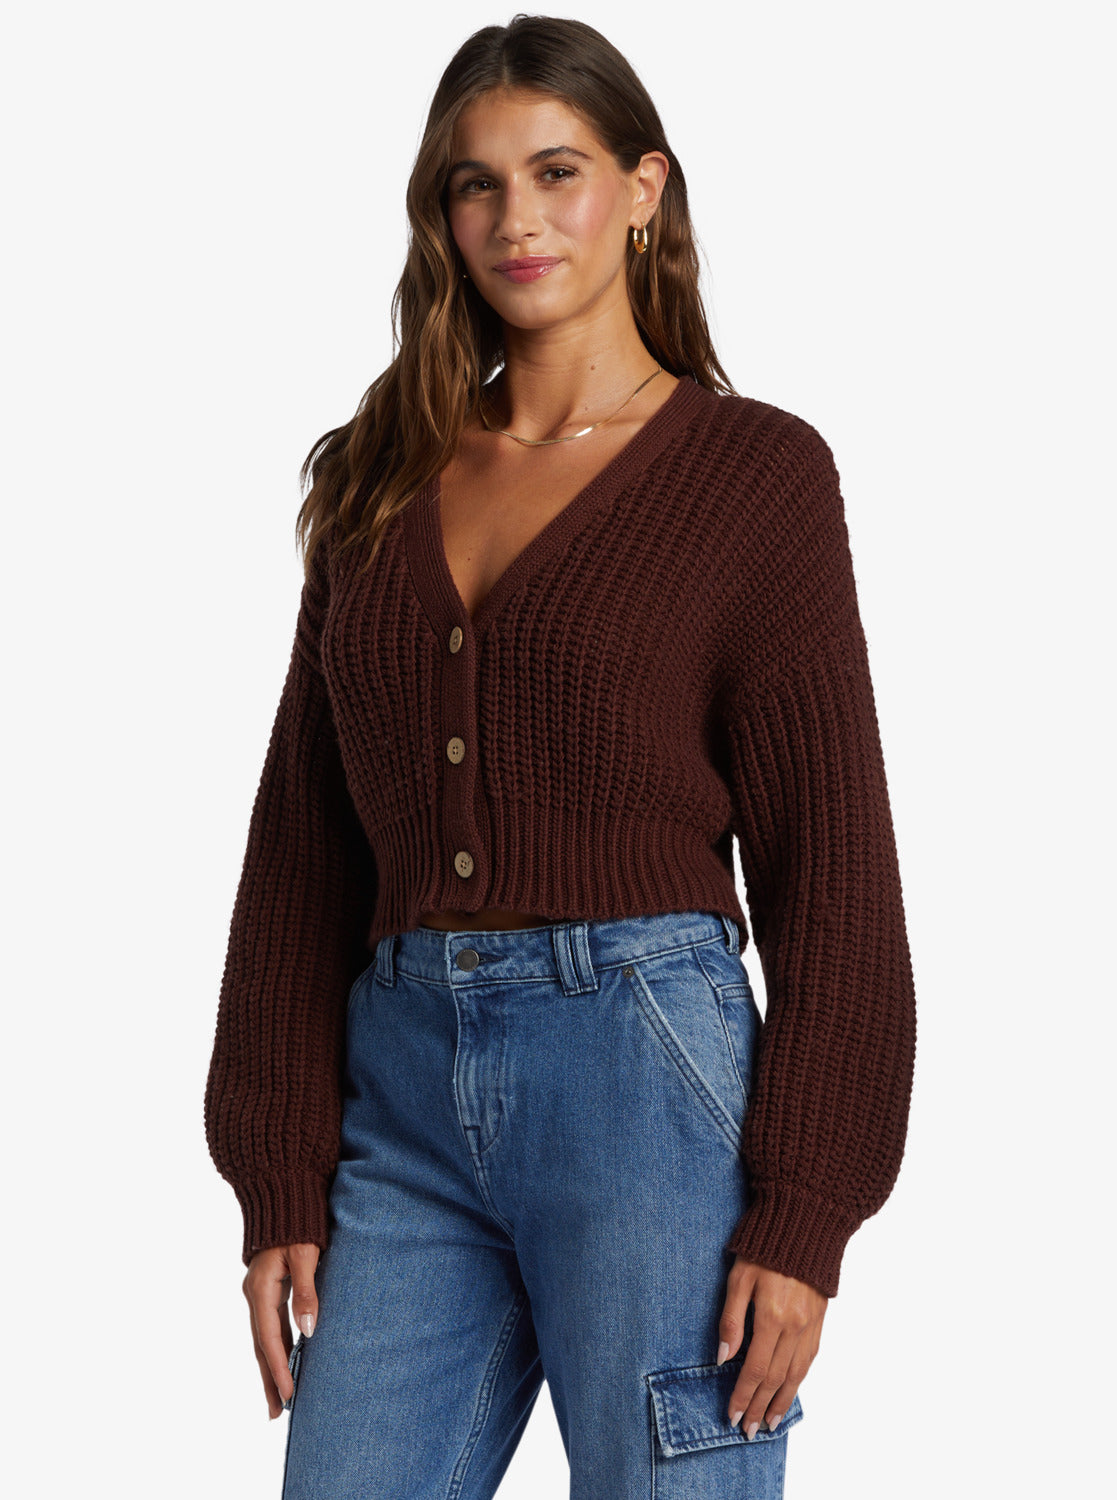 Sundaze Sweater - Bitter Chocolate – Roxy.com